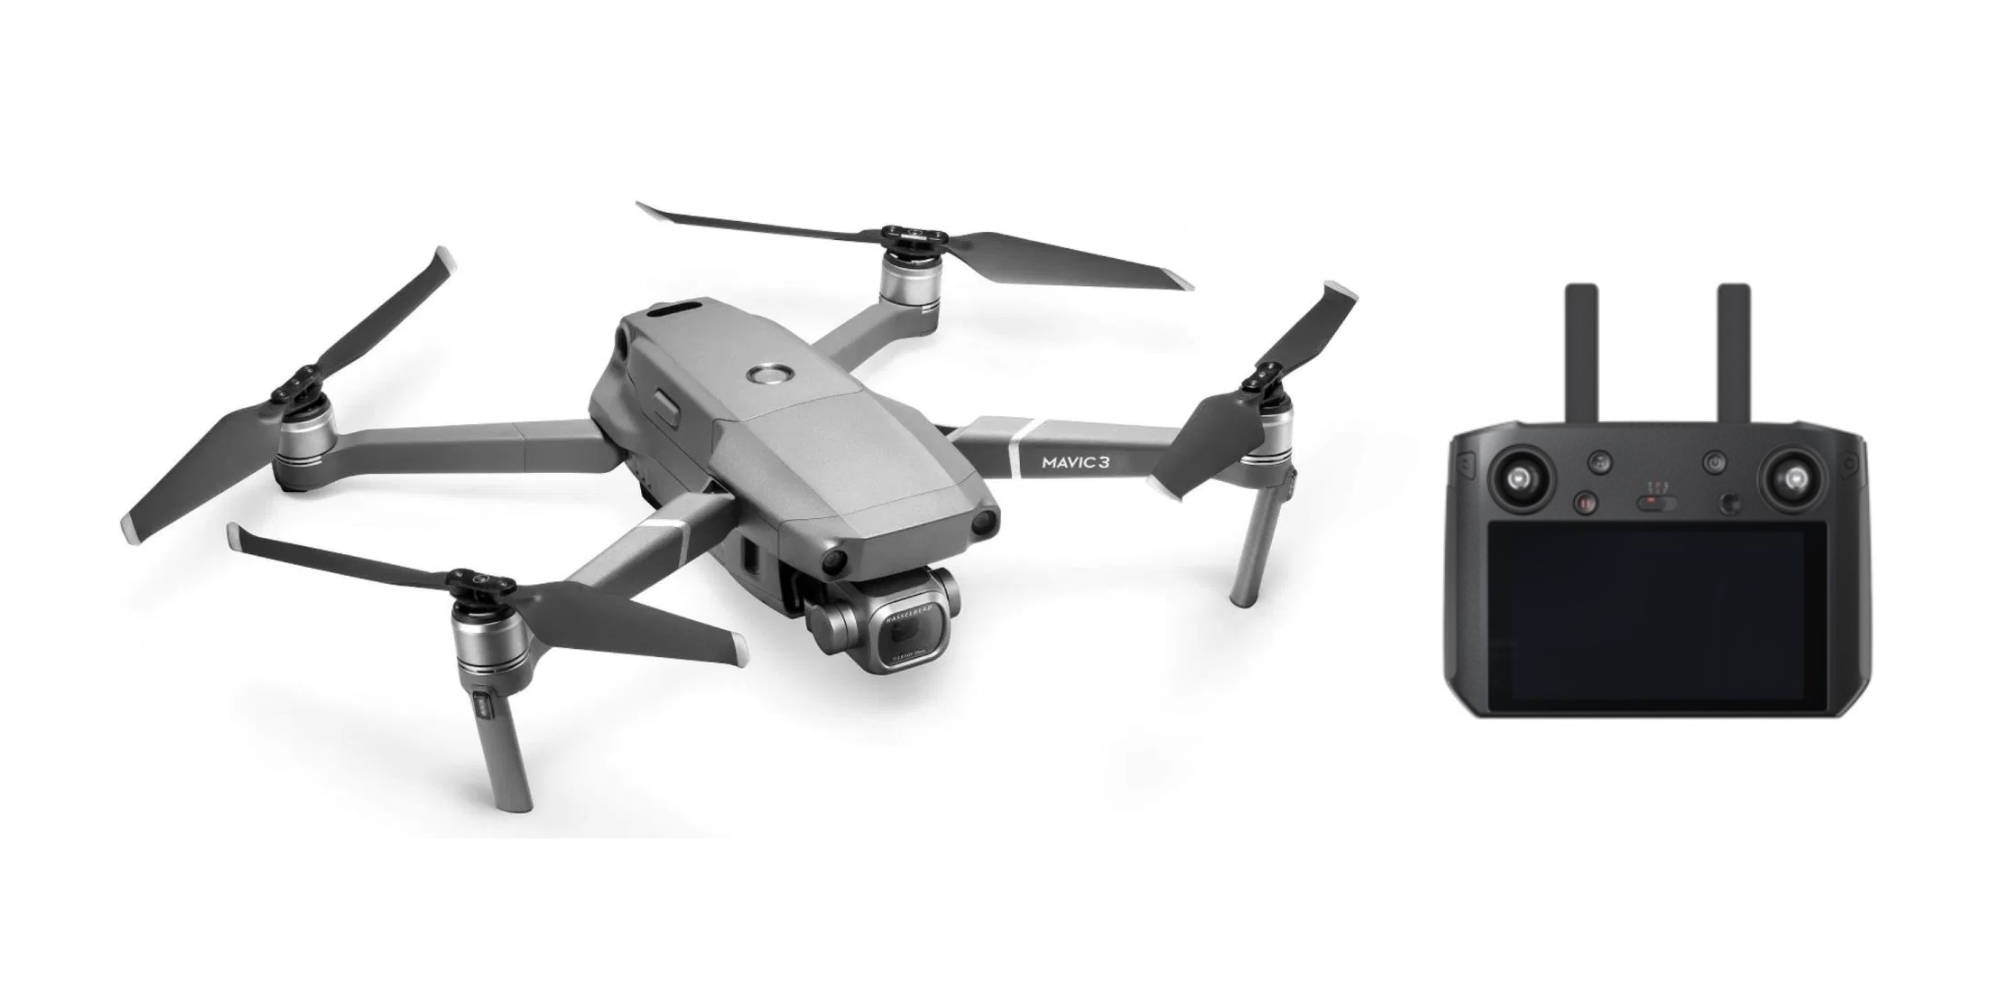 dji smart controller compatible drones